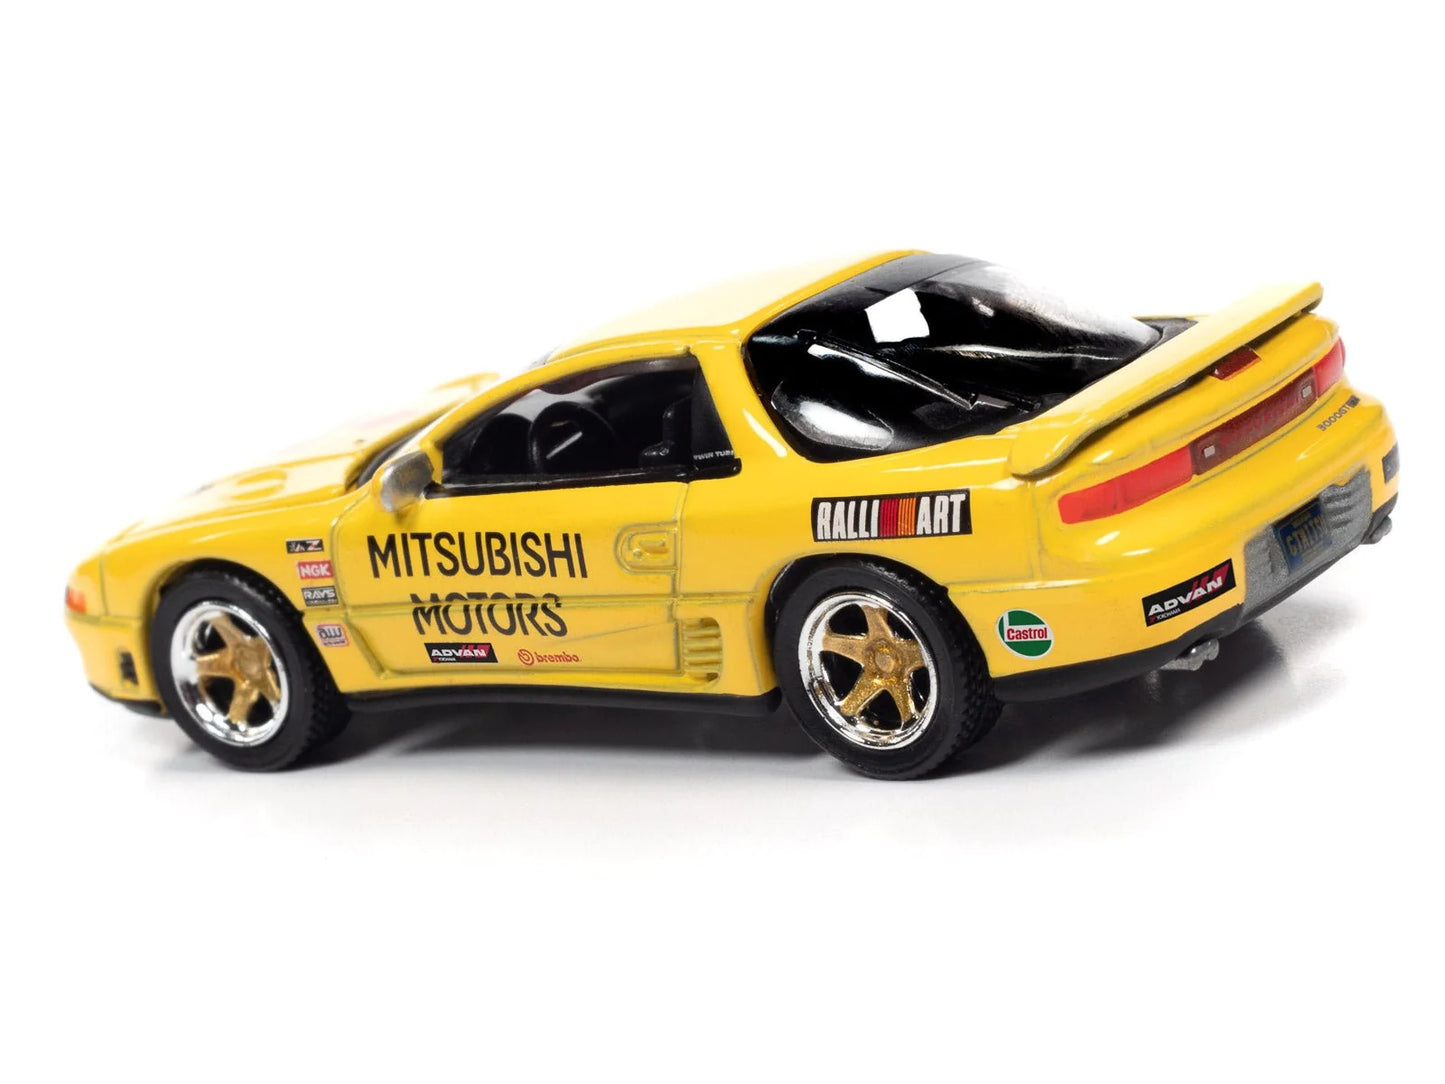 Auto World 1991 Mitsubishi 3000 GT VR-4 (AW Exclusive) 1:64 Scale Diecast - SCM130